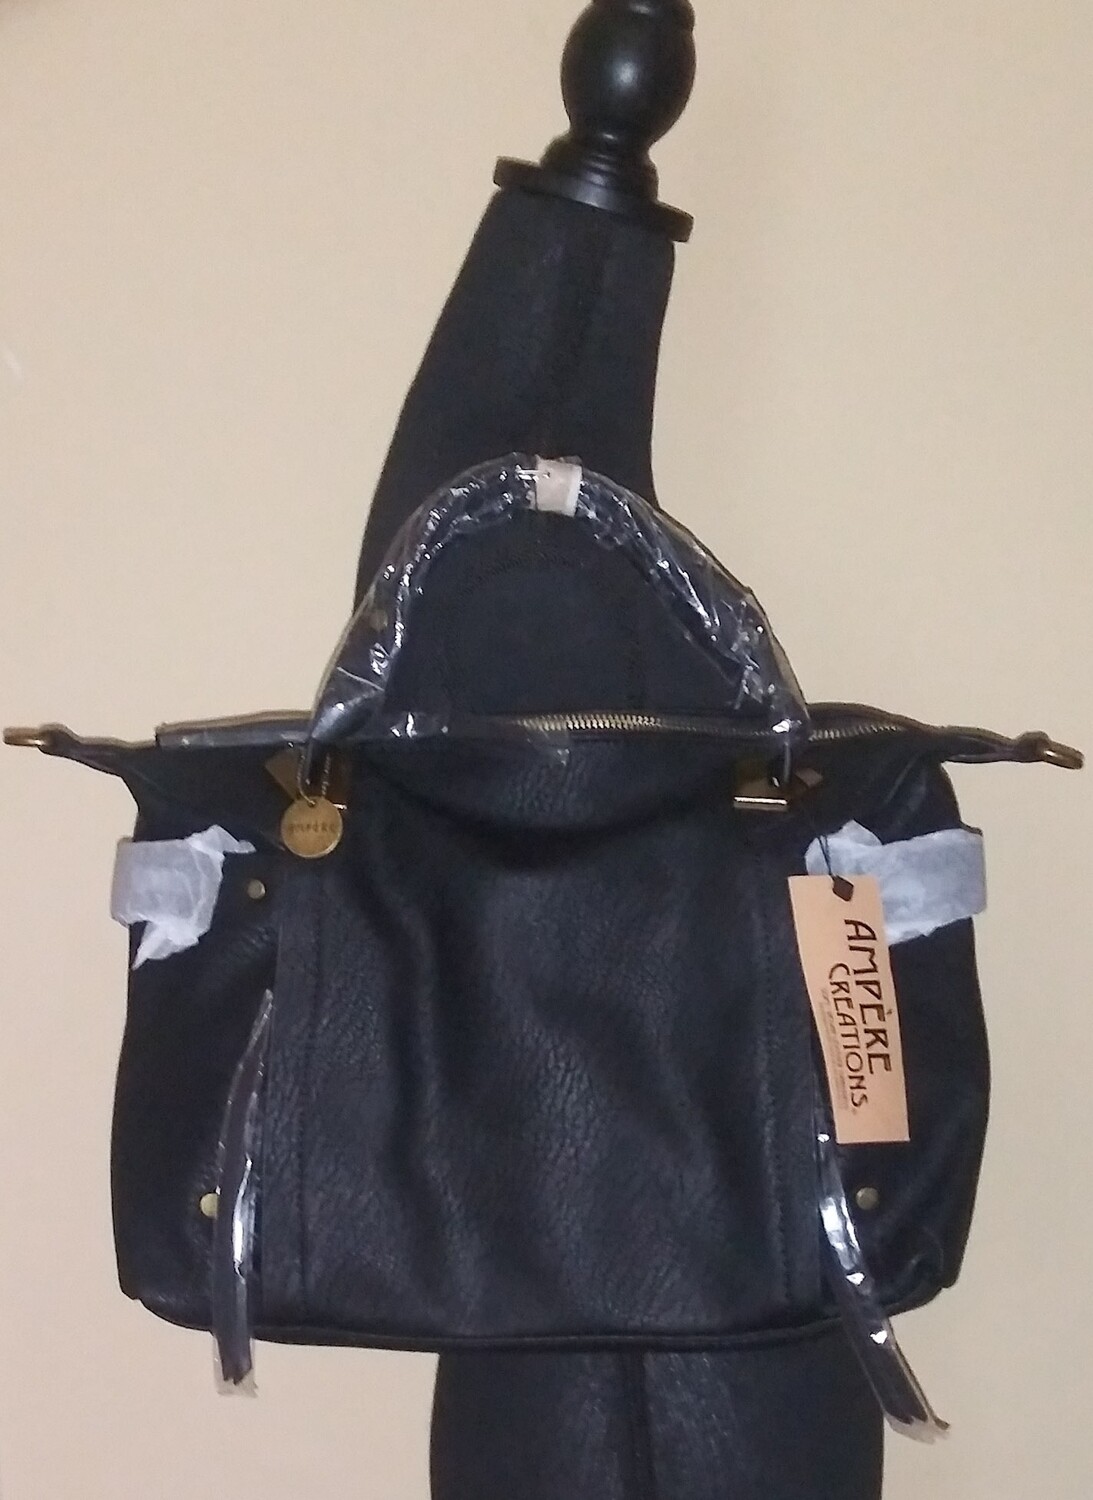 Vegan leather satchel